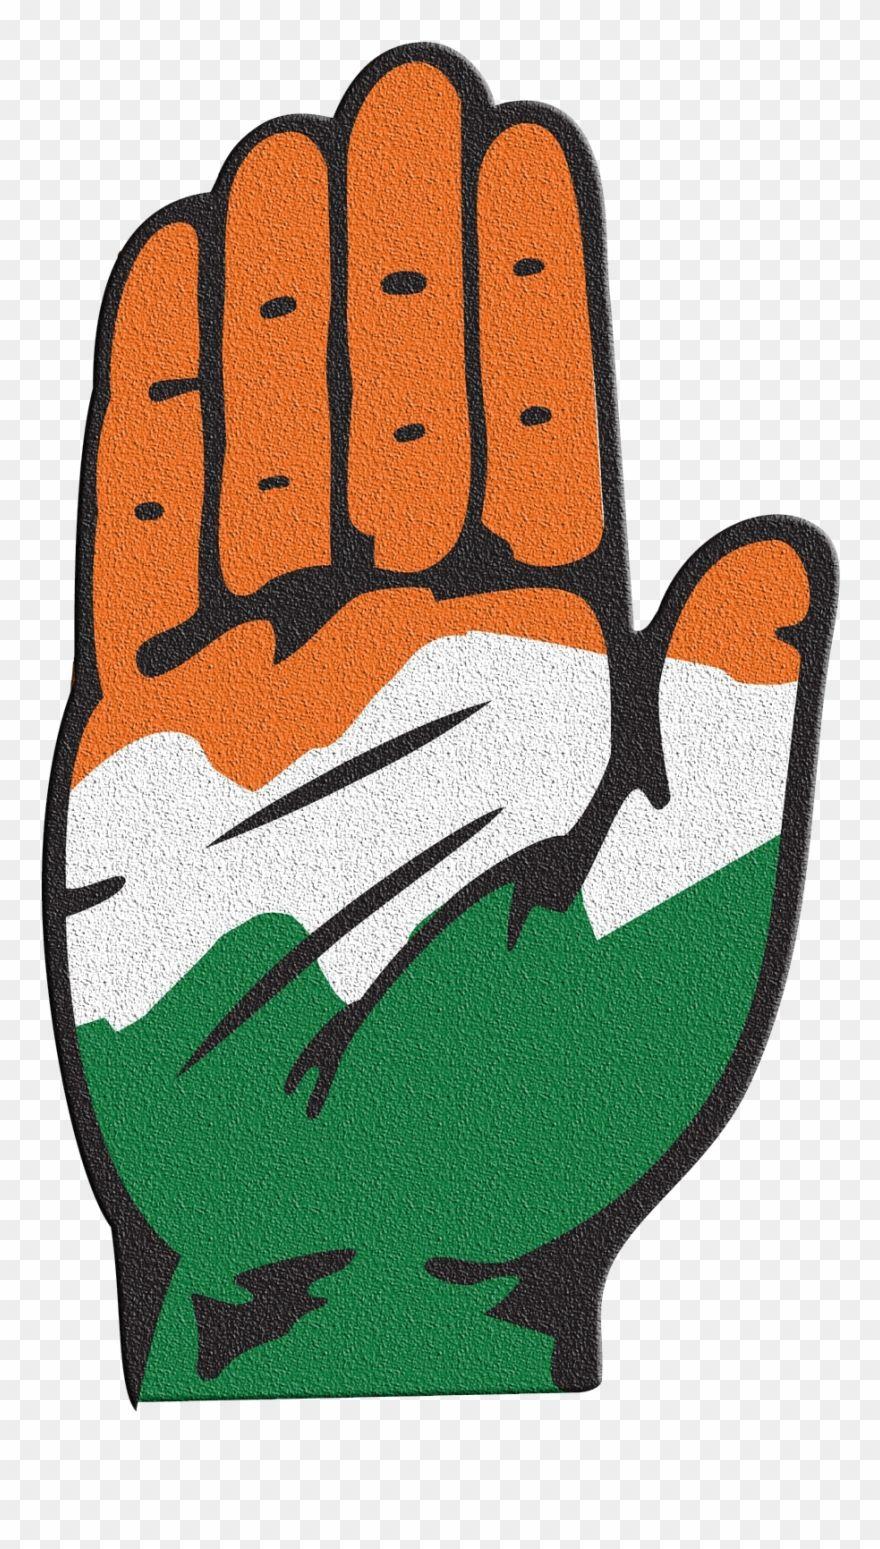 Congress Logo - Congress Logo Png Transparent Image National Congress Logo